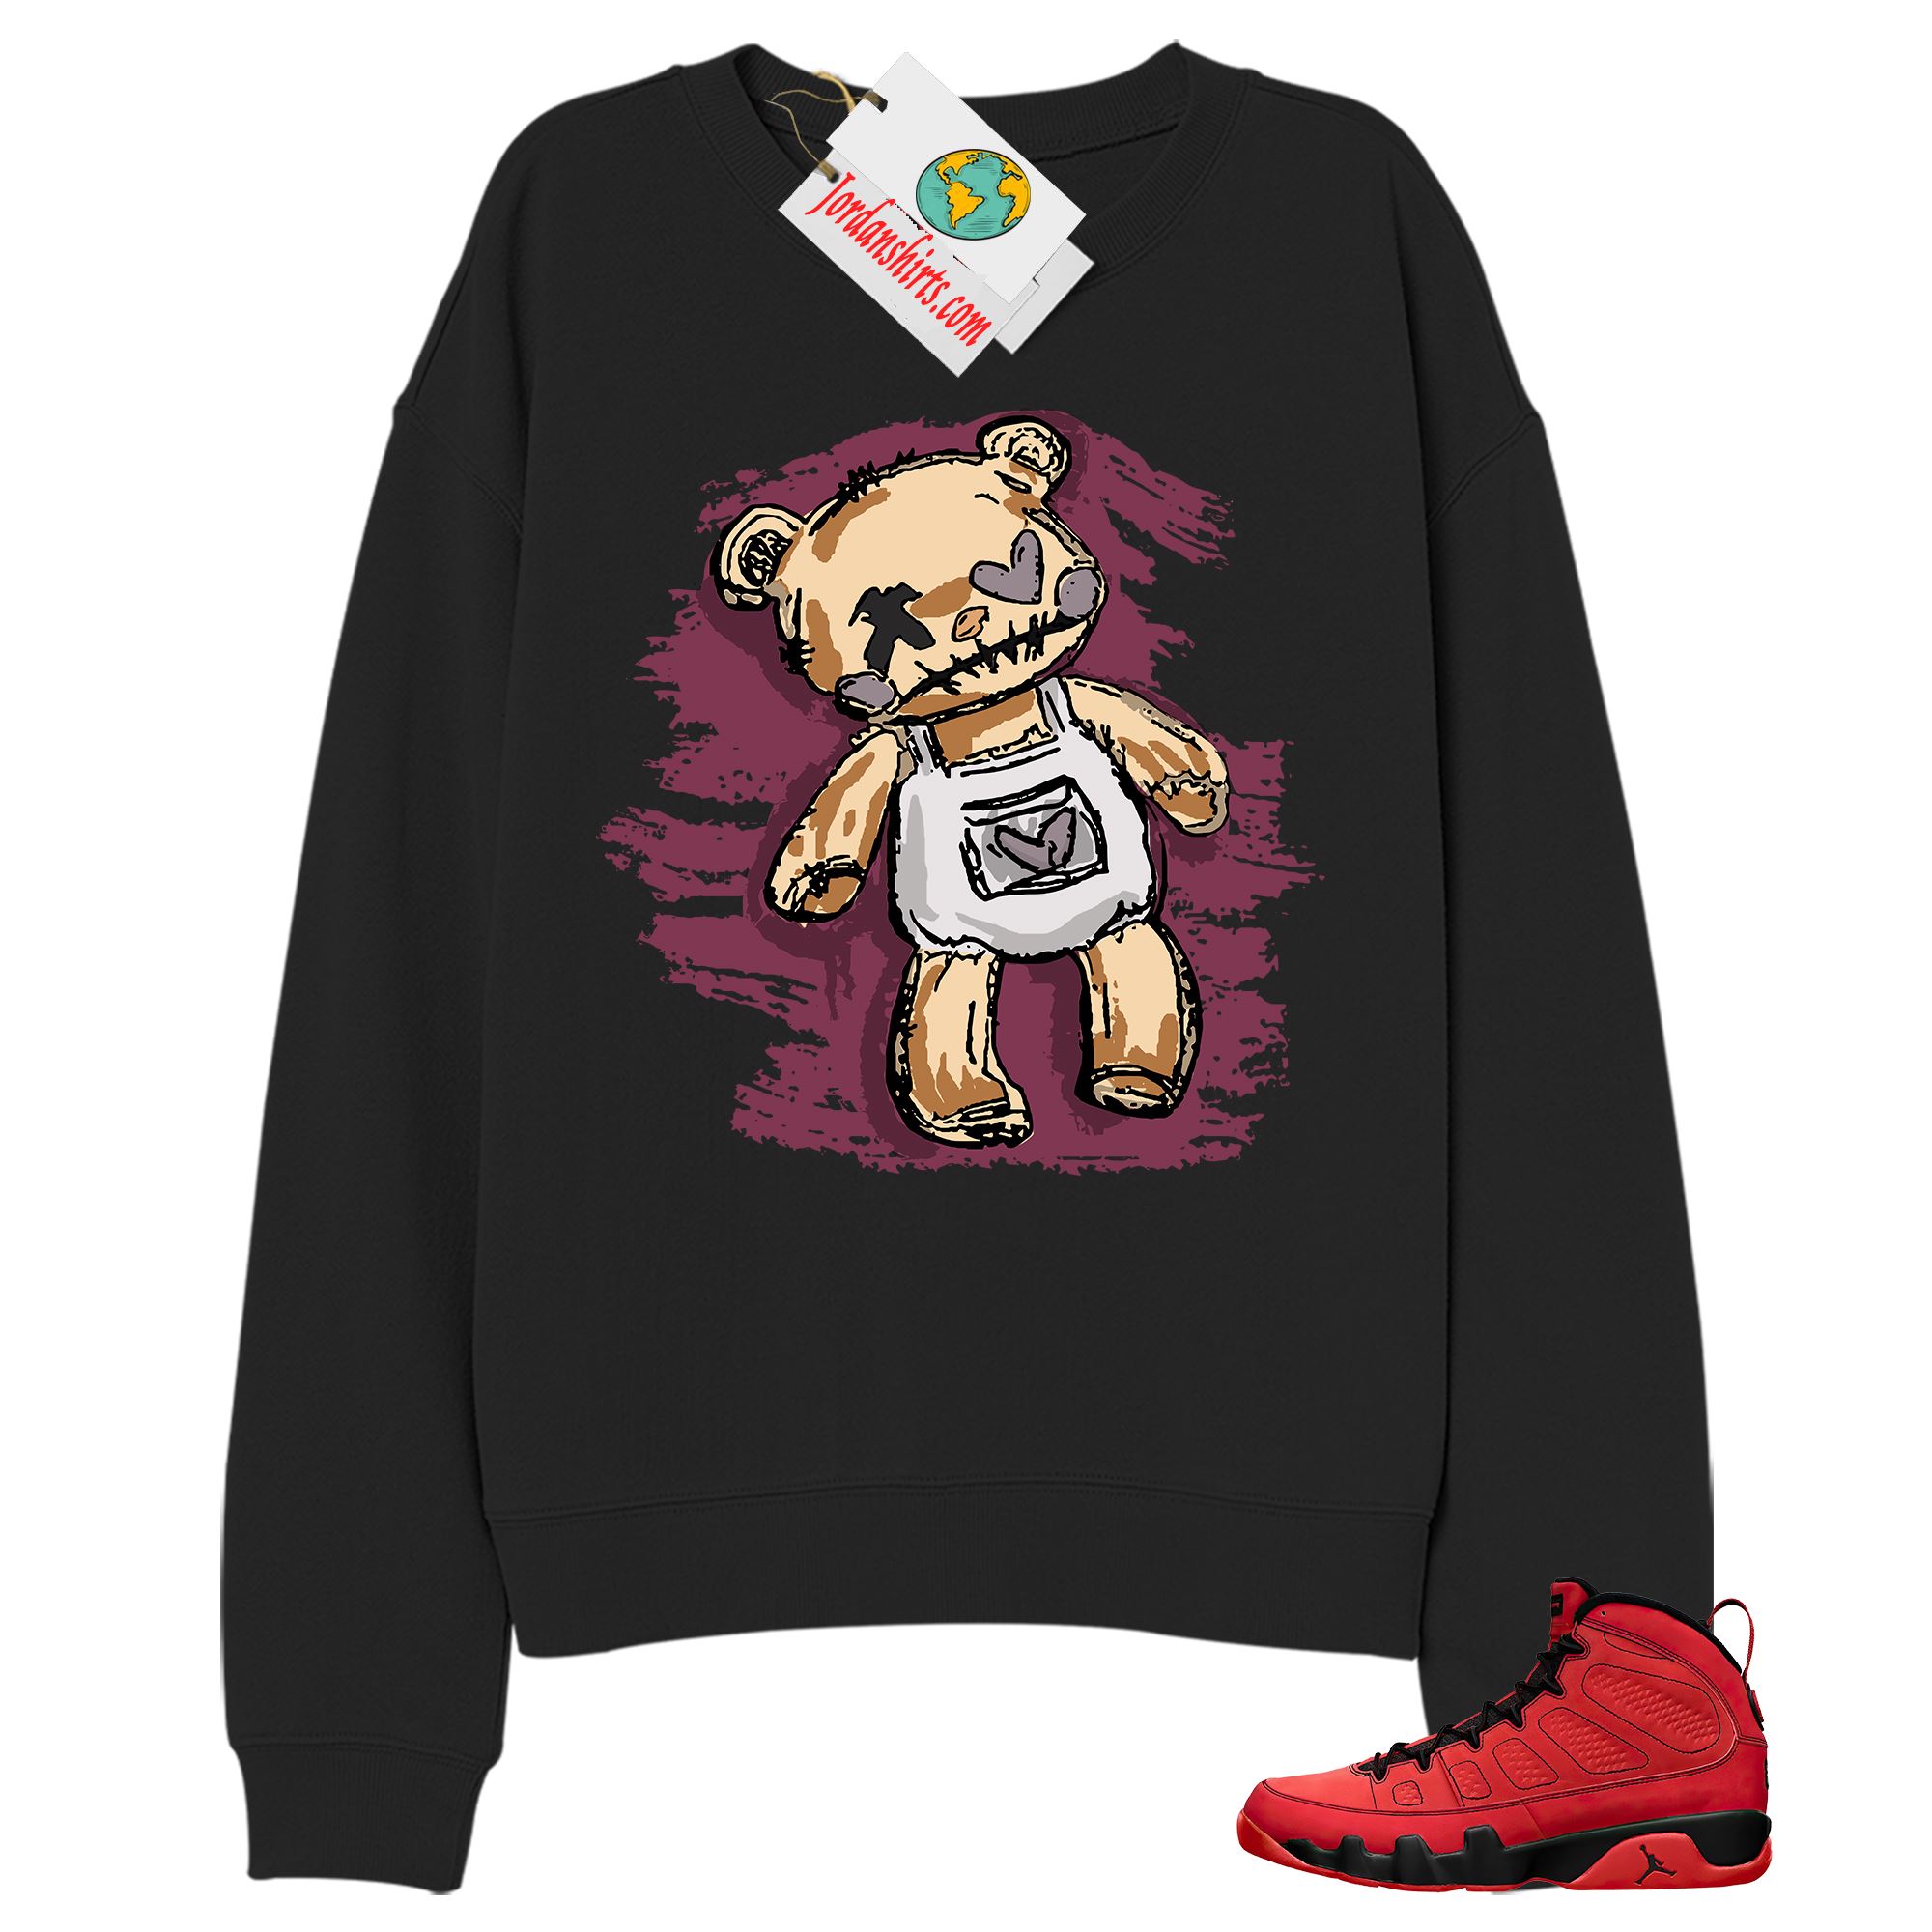 Jordan 9 Sweatshirt, Teddy Bear Broken Heart Black Sweatshirt Air Jordan 9 Chile Red 9s Full Size Up To 5xl